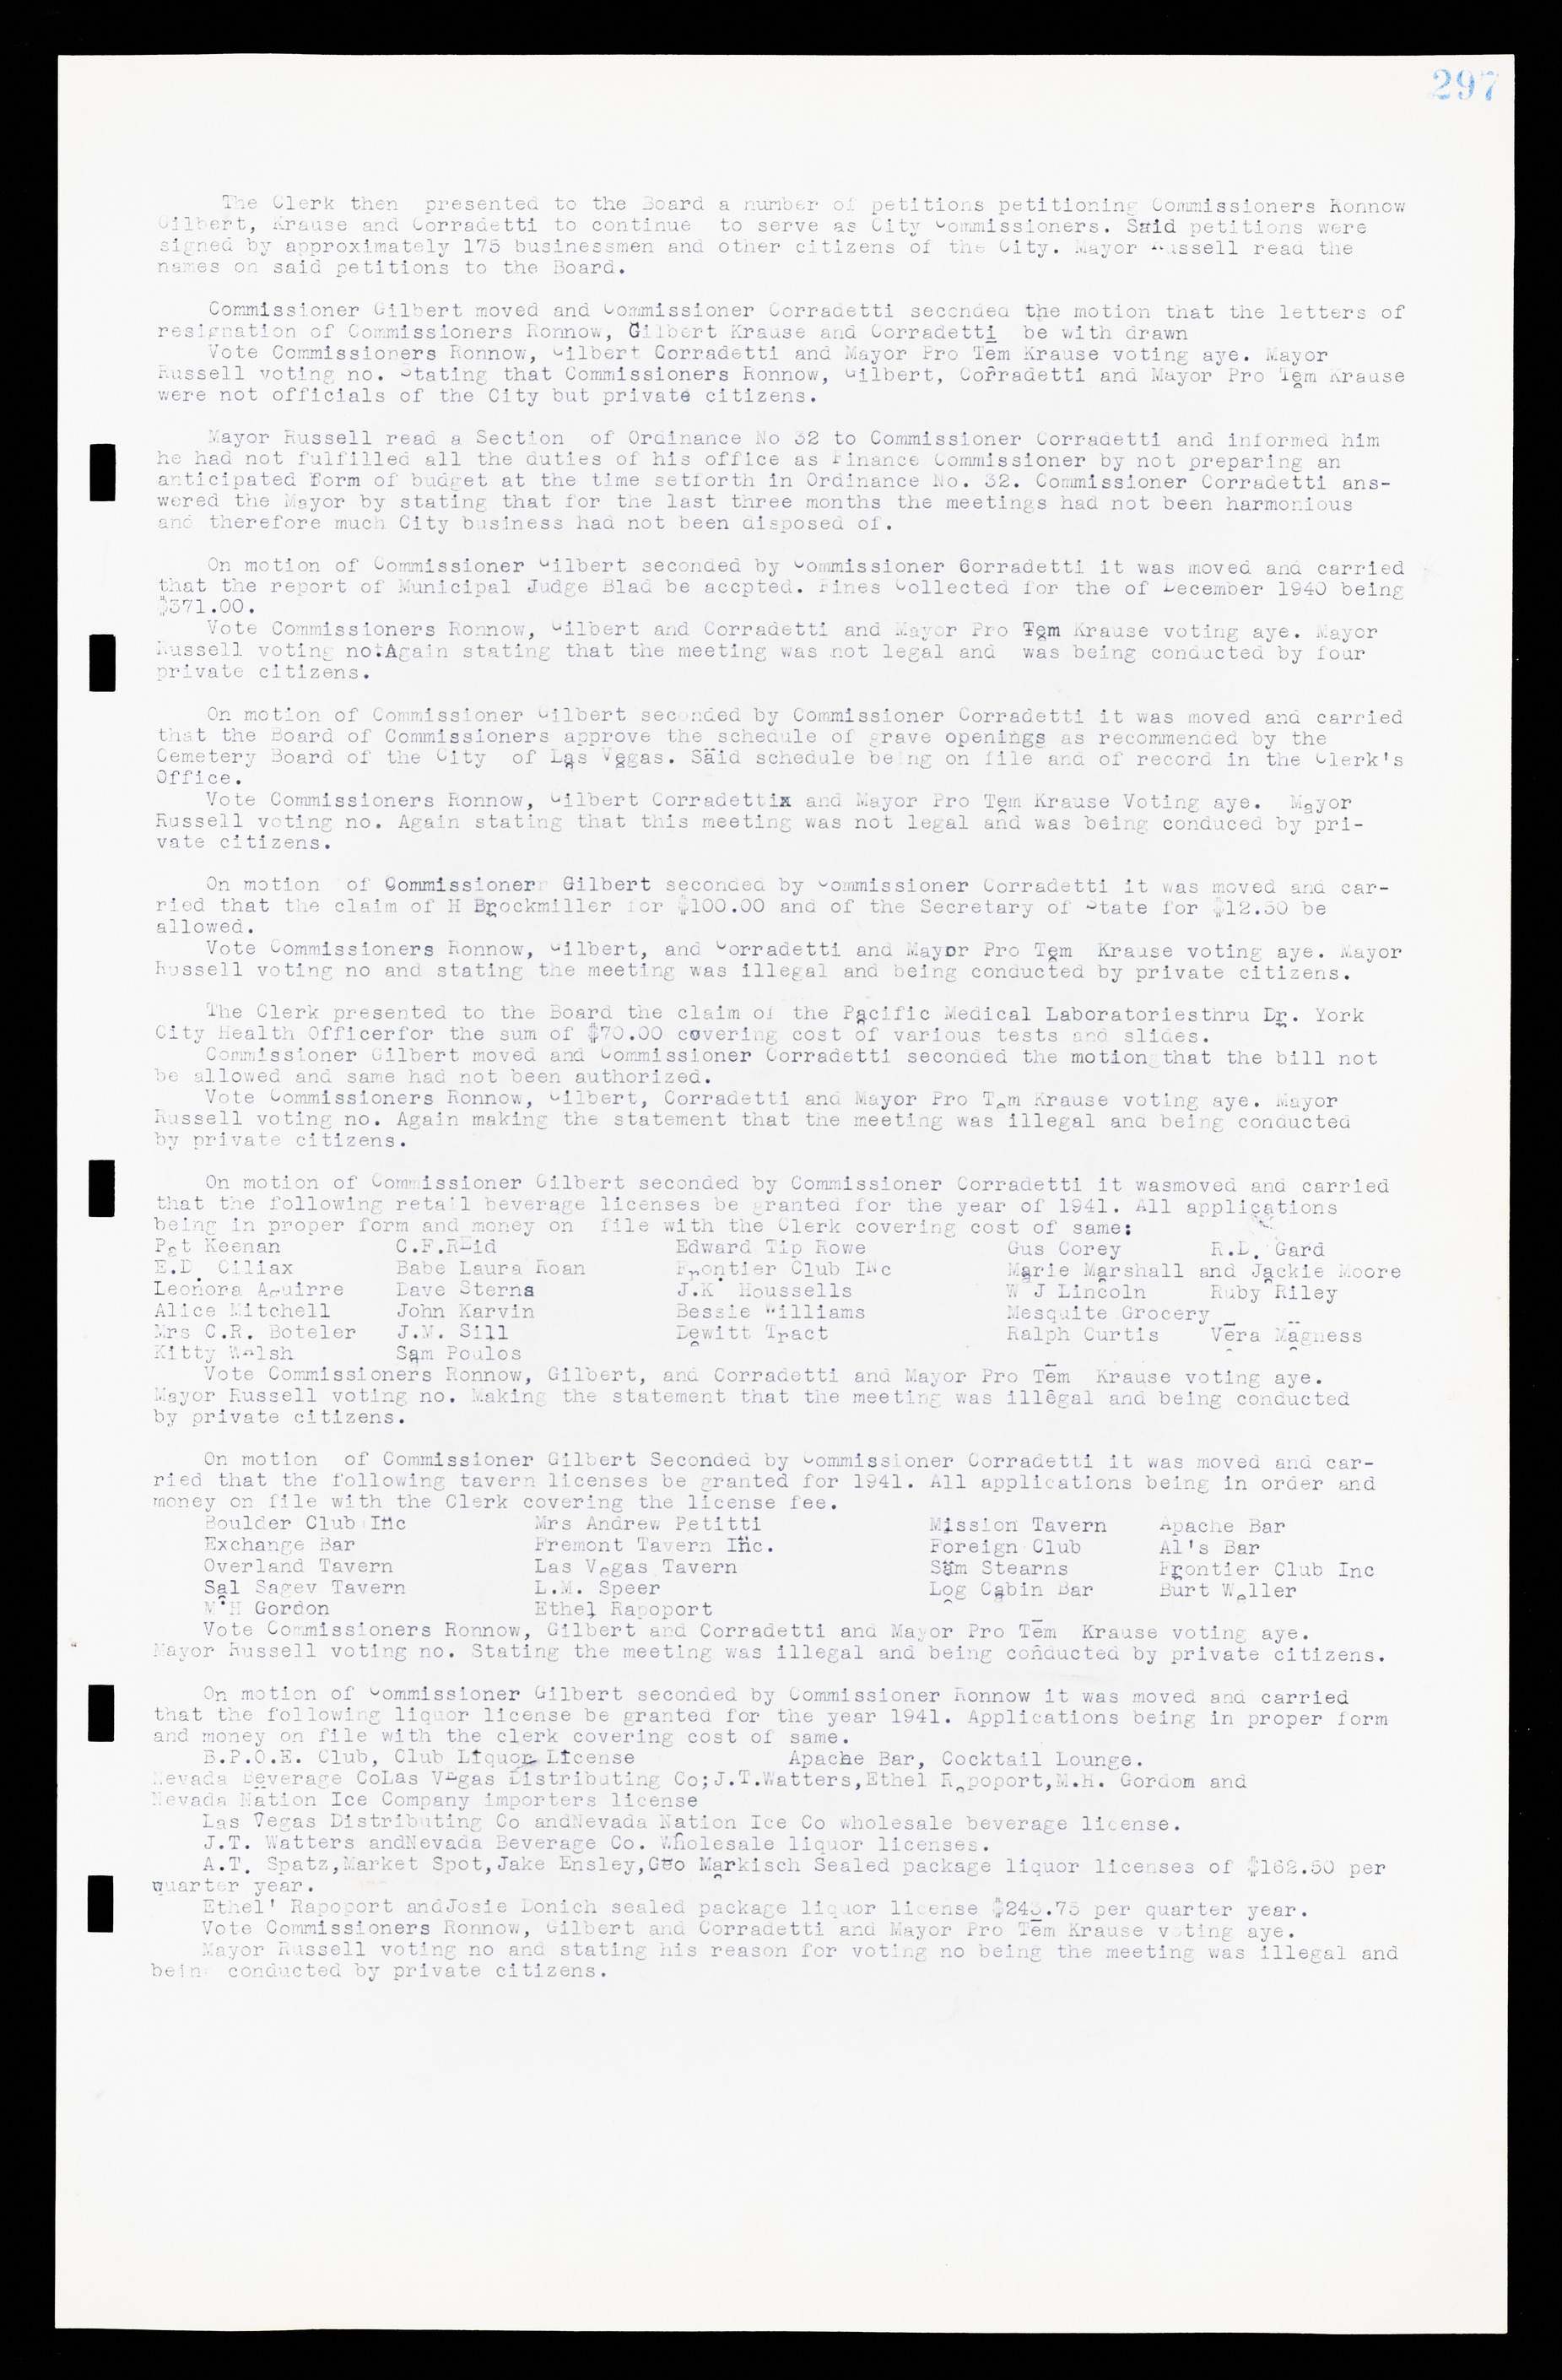 Las Vegas City Commission Minutes, February 17, 1937 to August 4, 1942, lvc000004-321